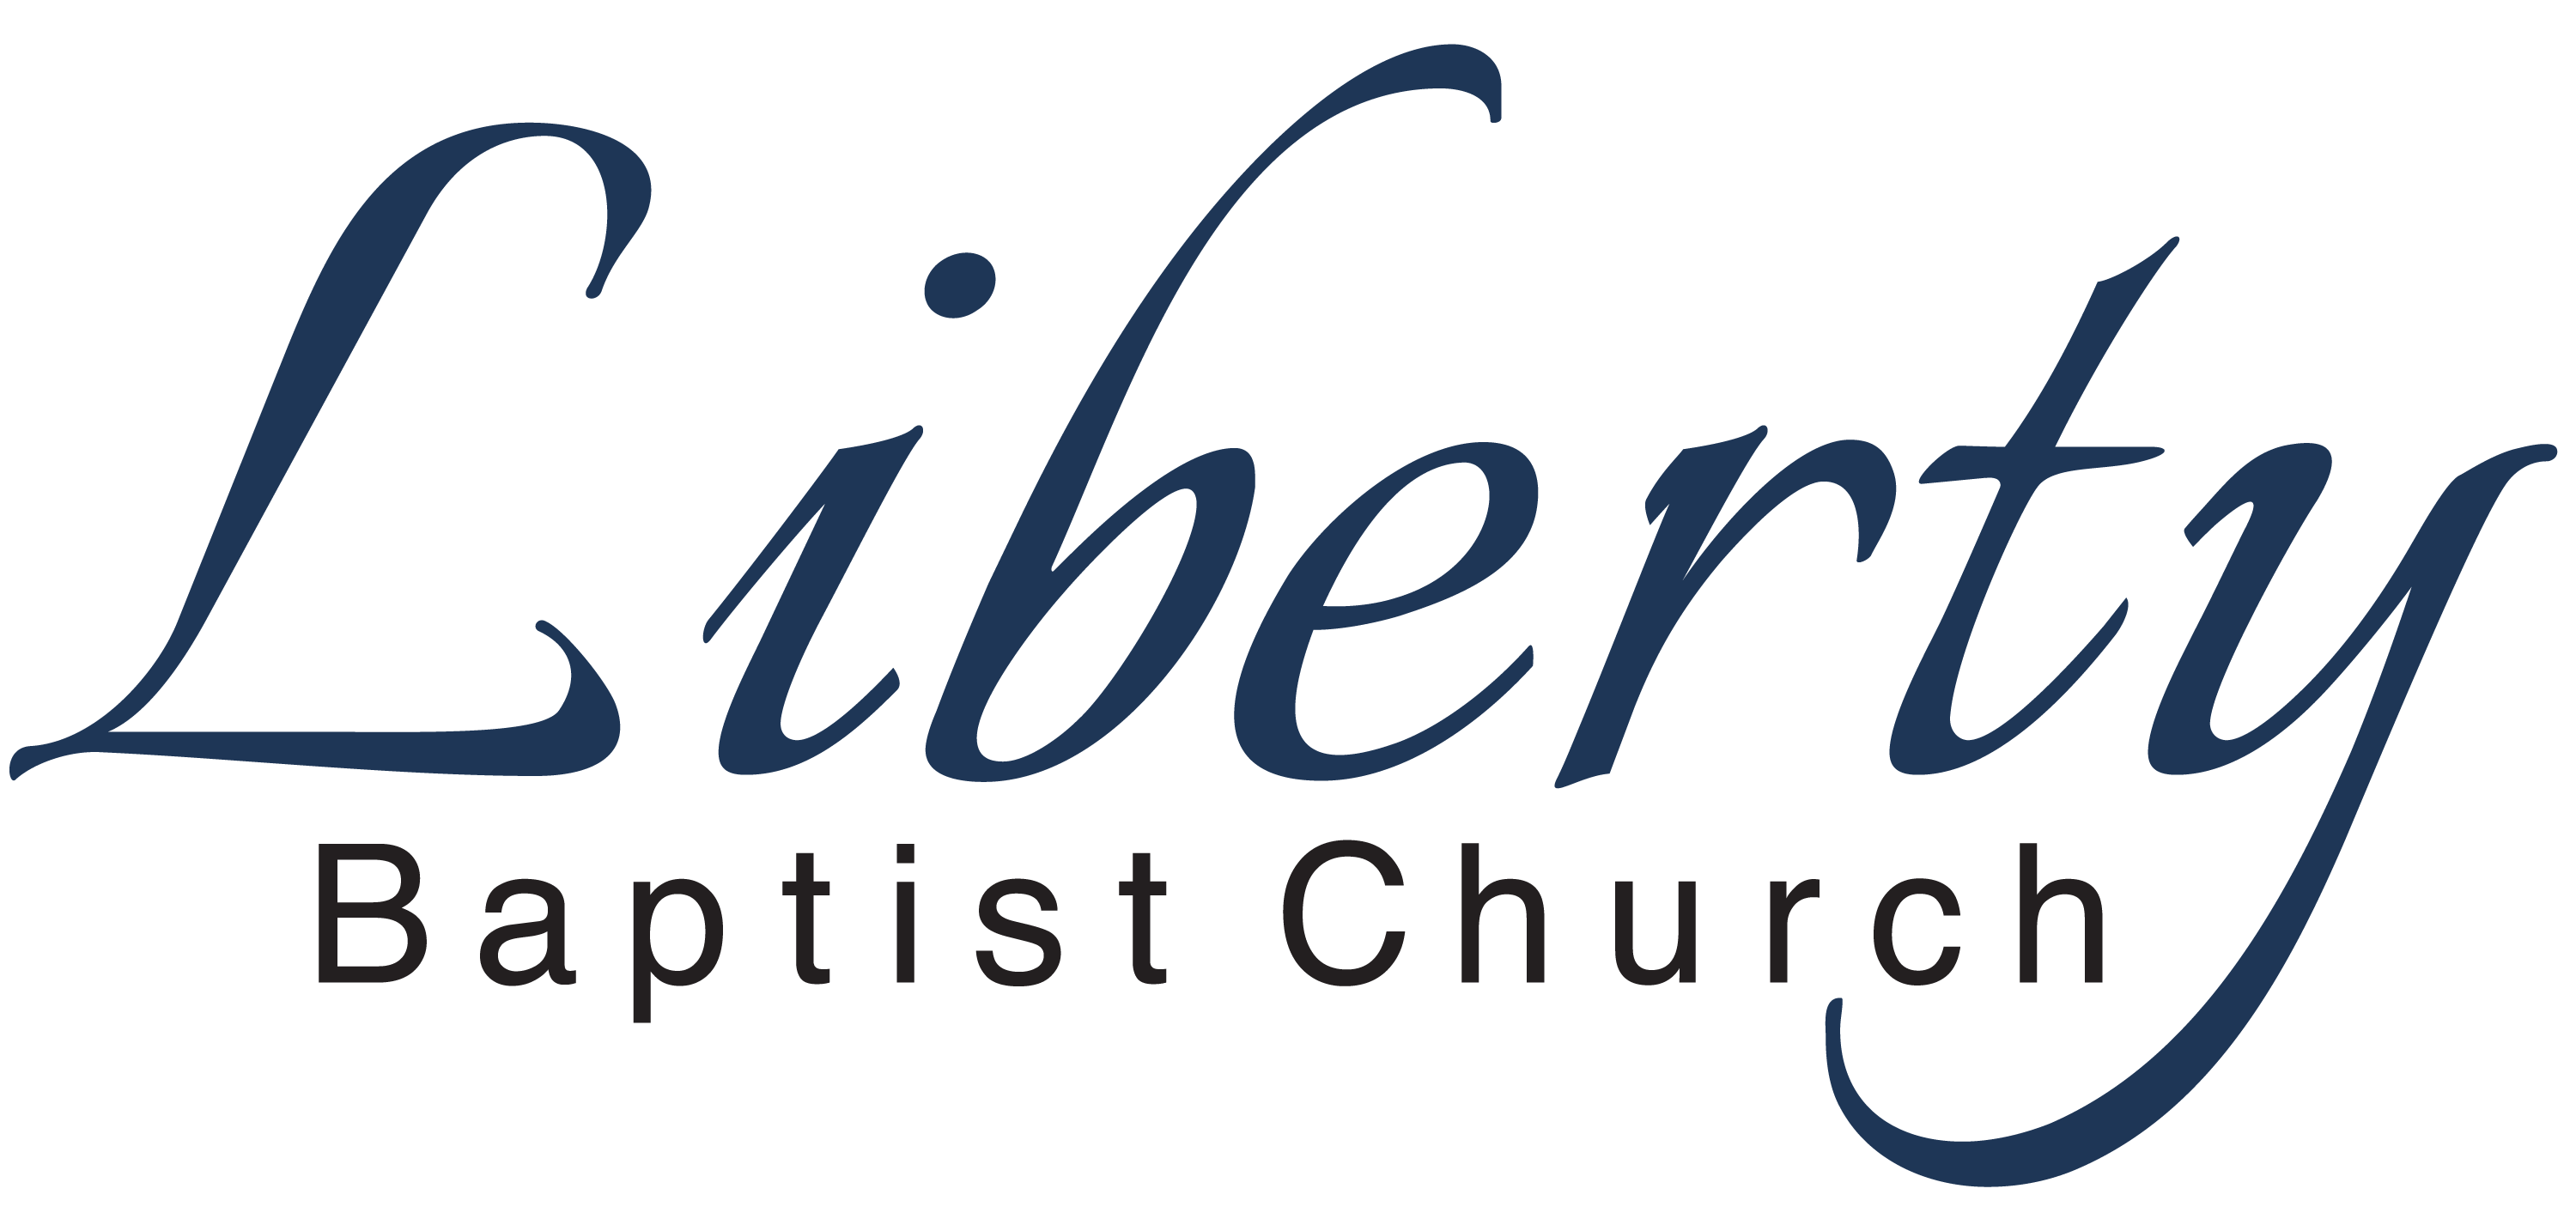 Liberty Baptist Church logo